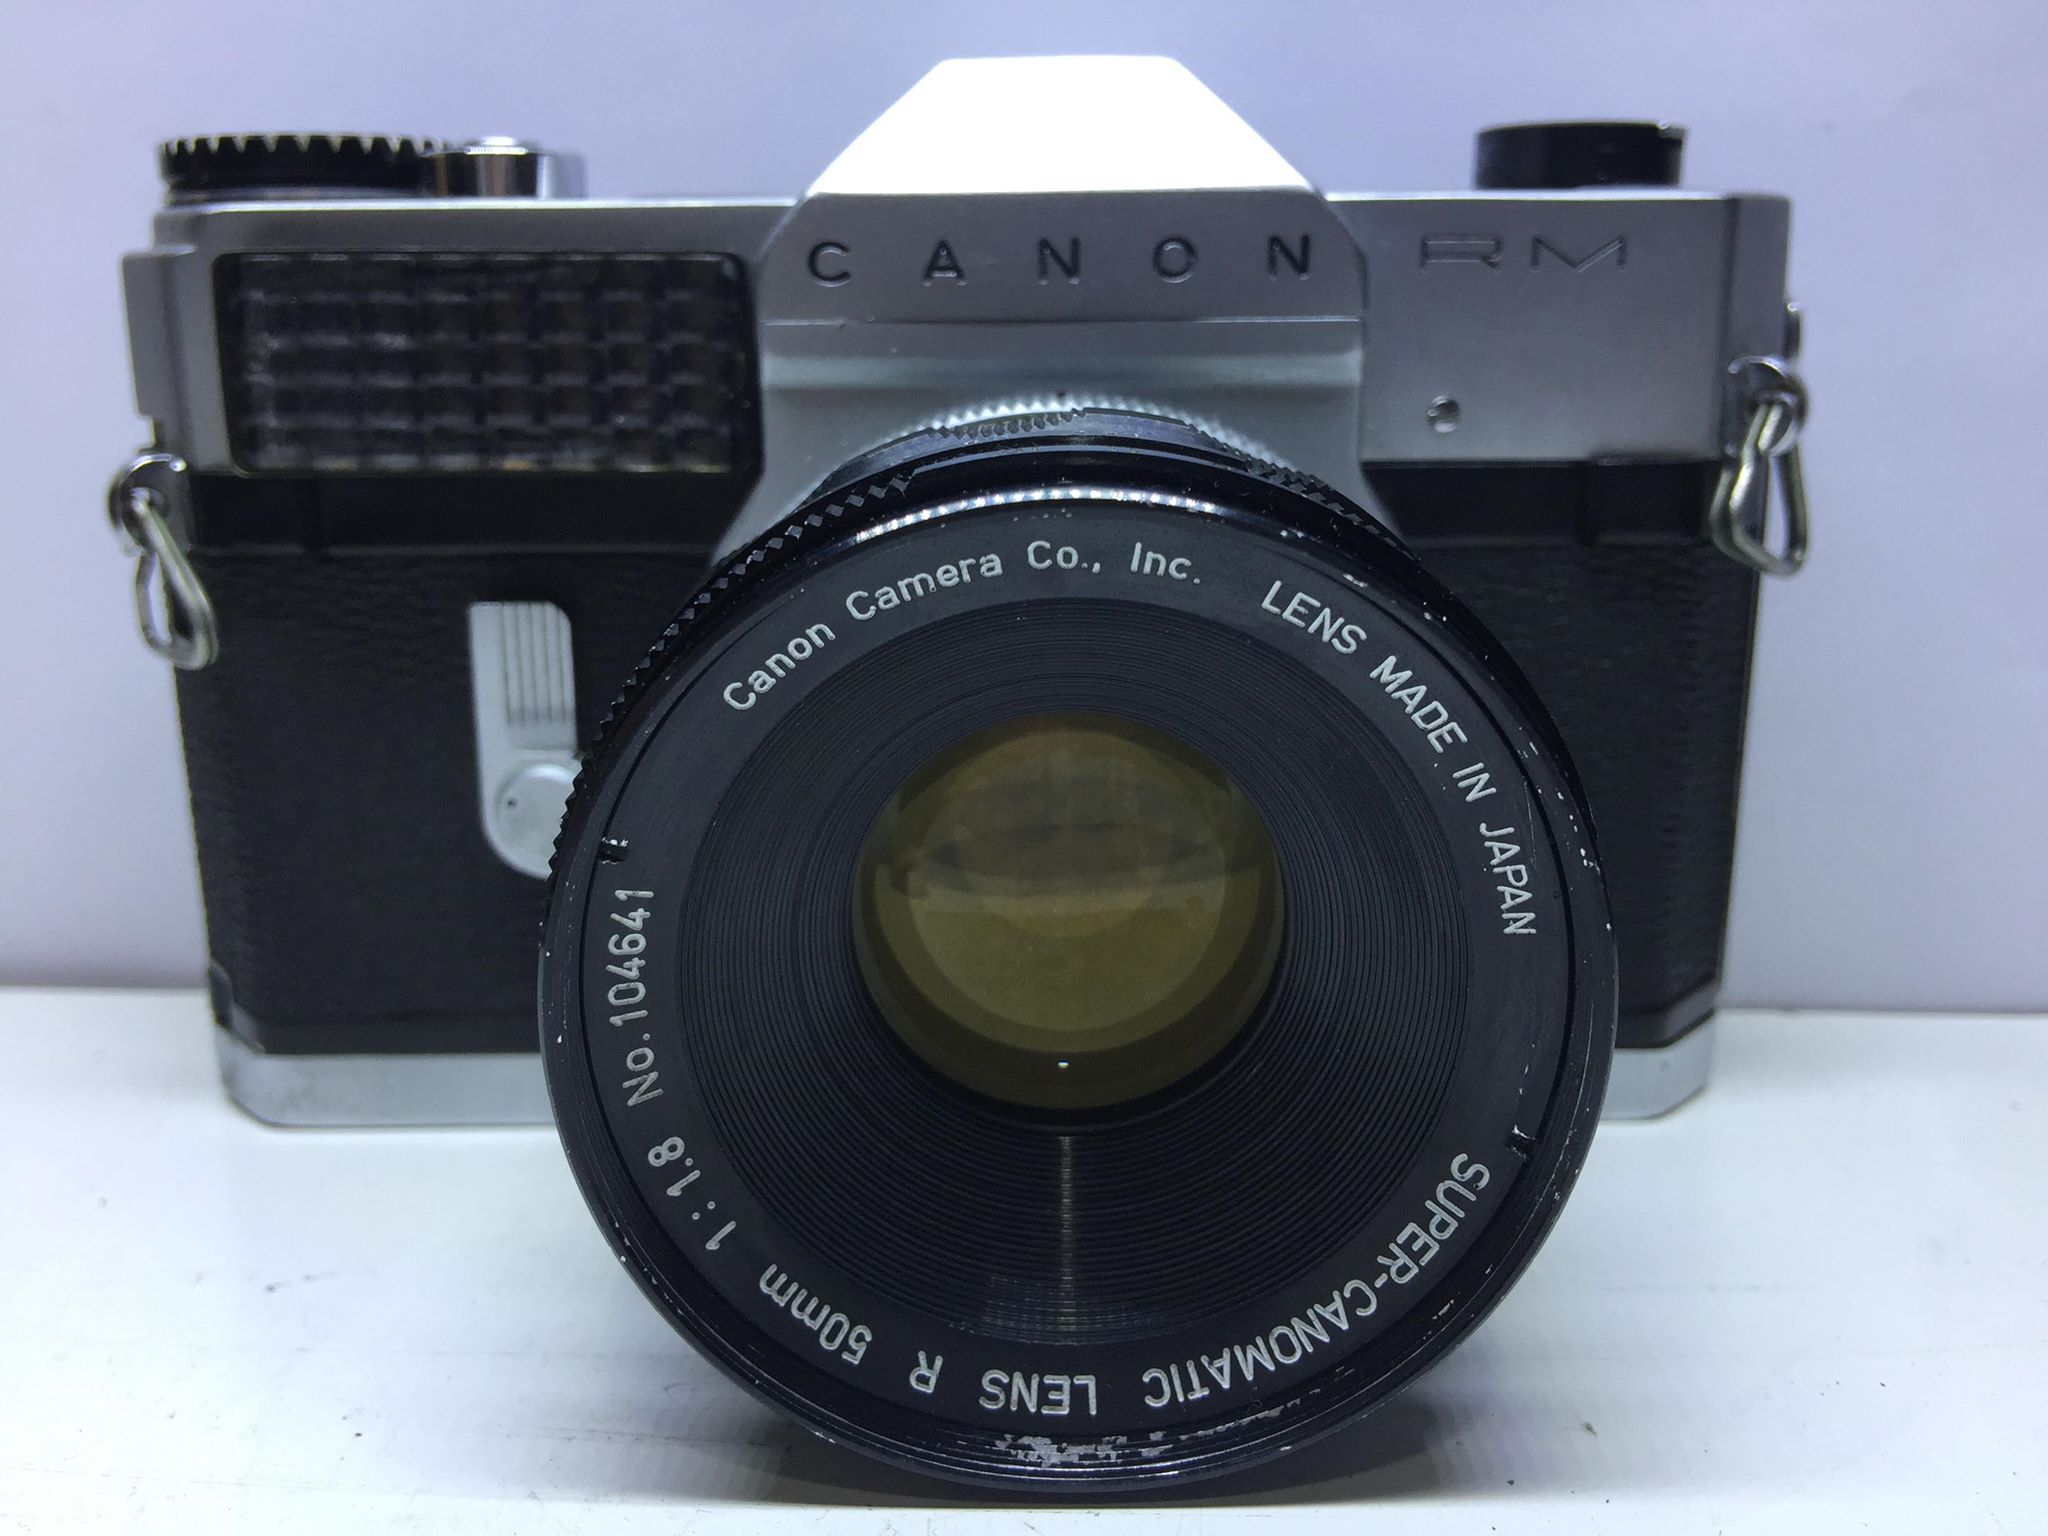 CANON Canonflex SUPER-CANOMATIC R 50mm F1.8 35mm Film Single-Lens Reflex  Camera キヤノン最初の一眼レフ 不朽の価値あり 1959年発売